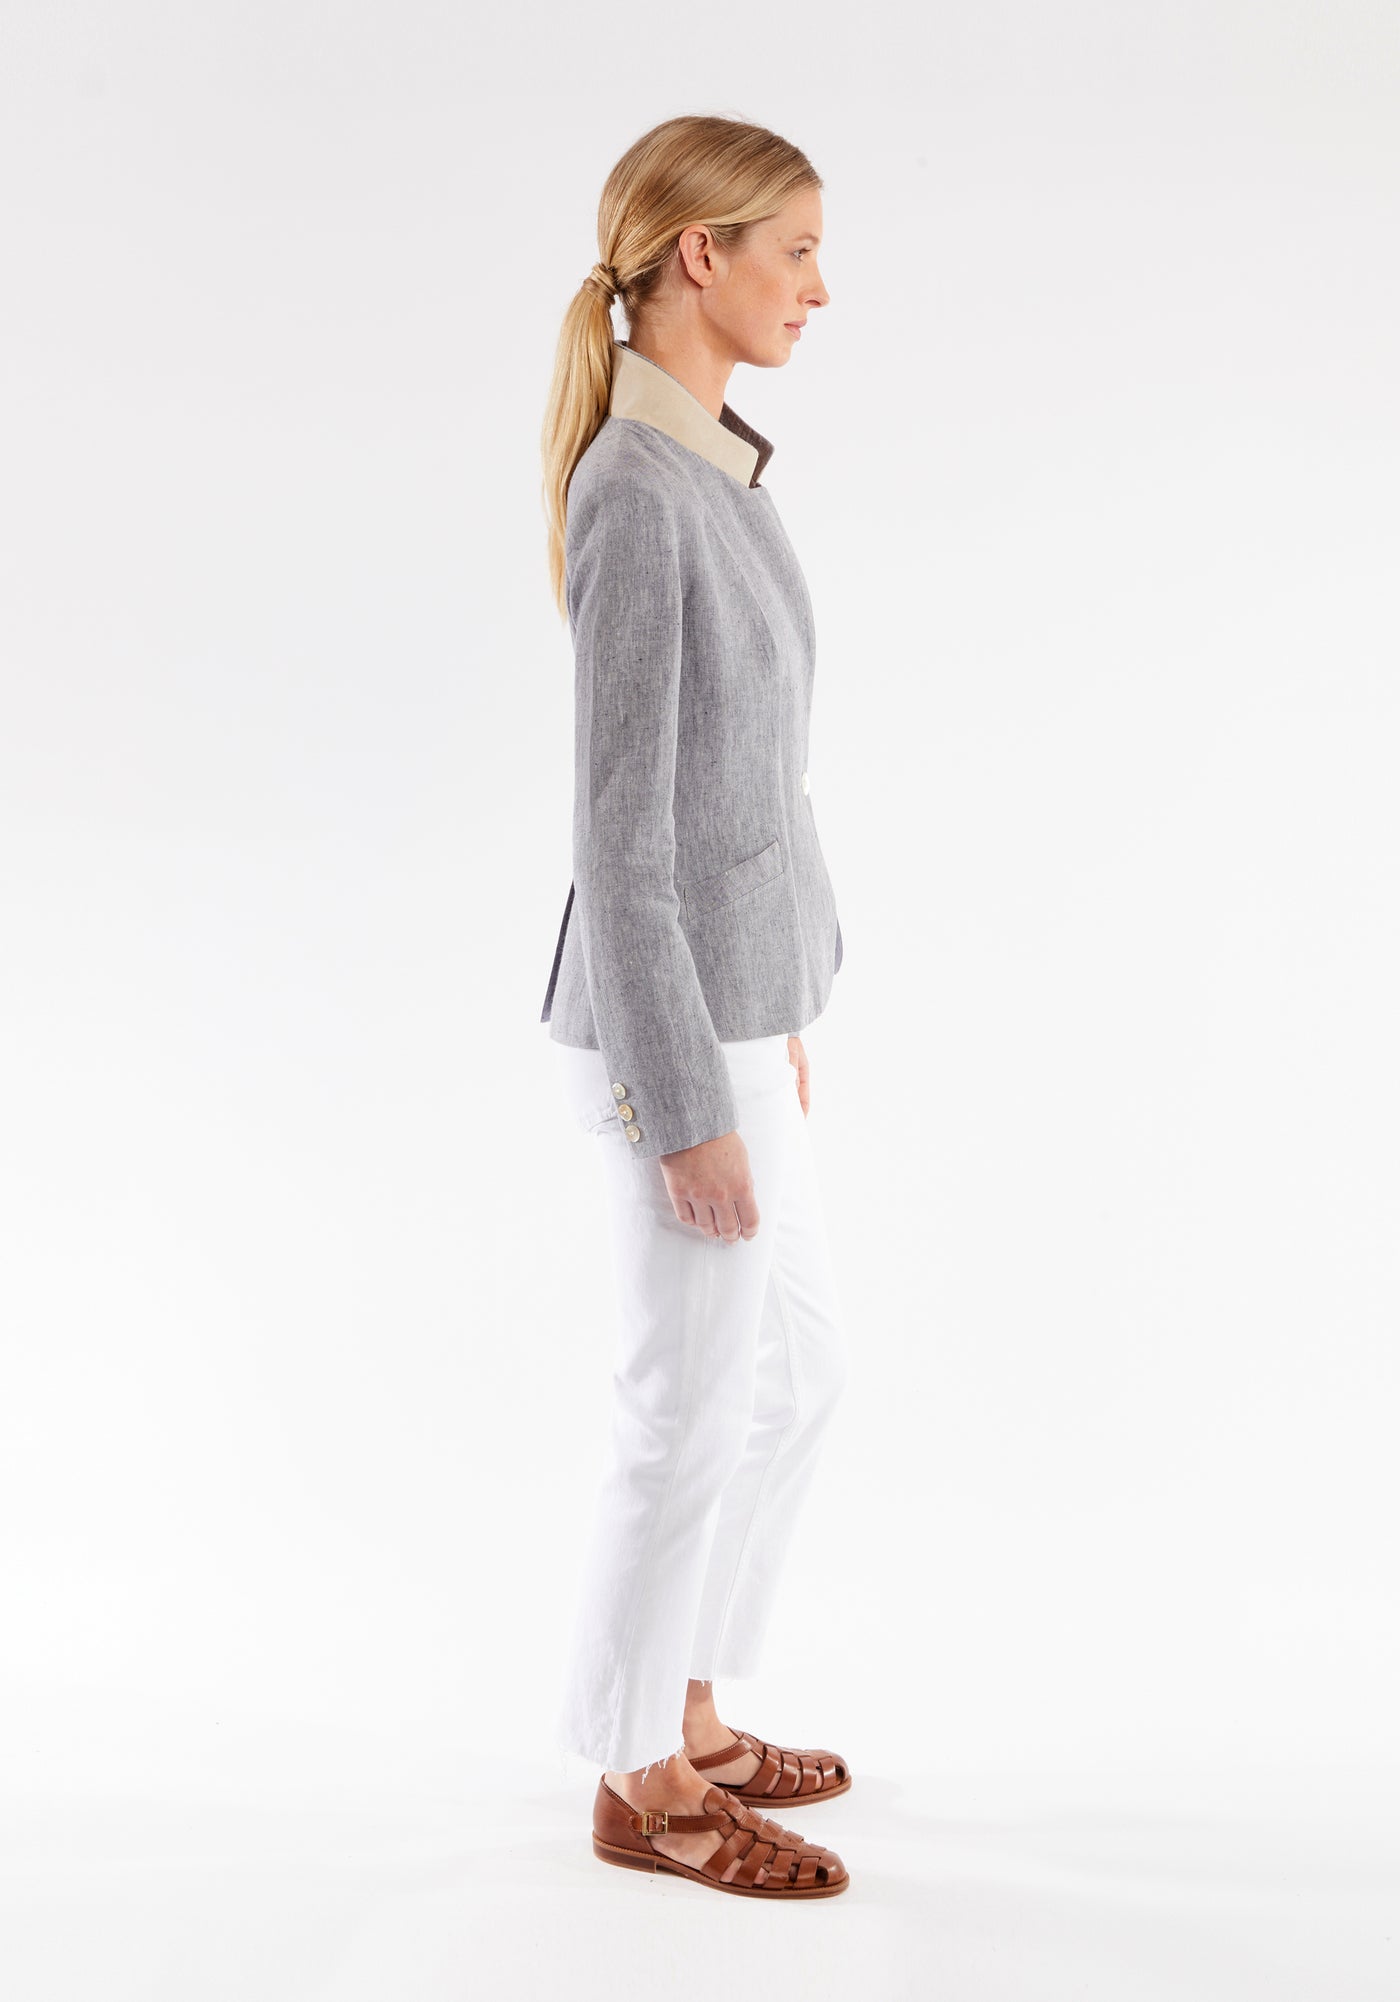 Tallulah Jacket | Navy White Linen